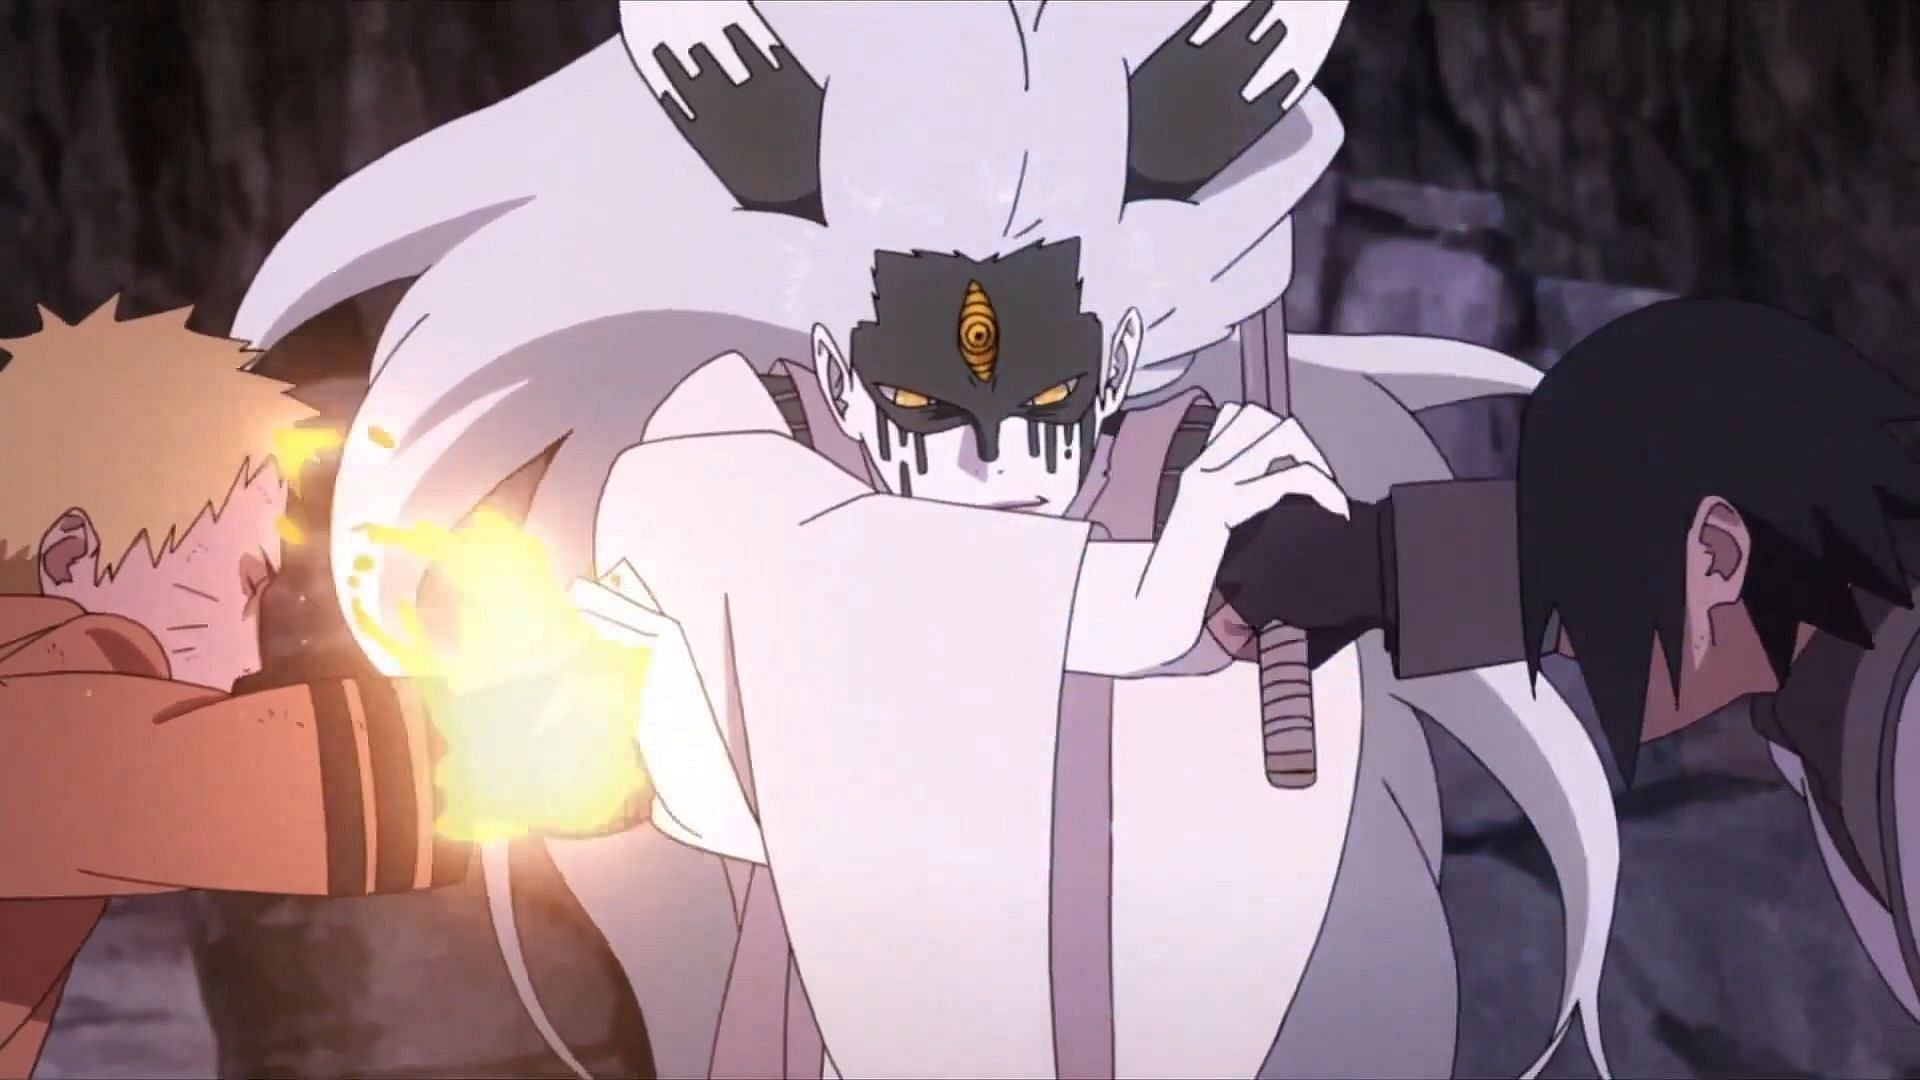 Momoshiki vs Naruto &amp; Sasuke fight in the Boruto anime (Image via Studio Pierrot)